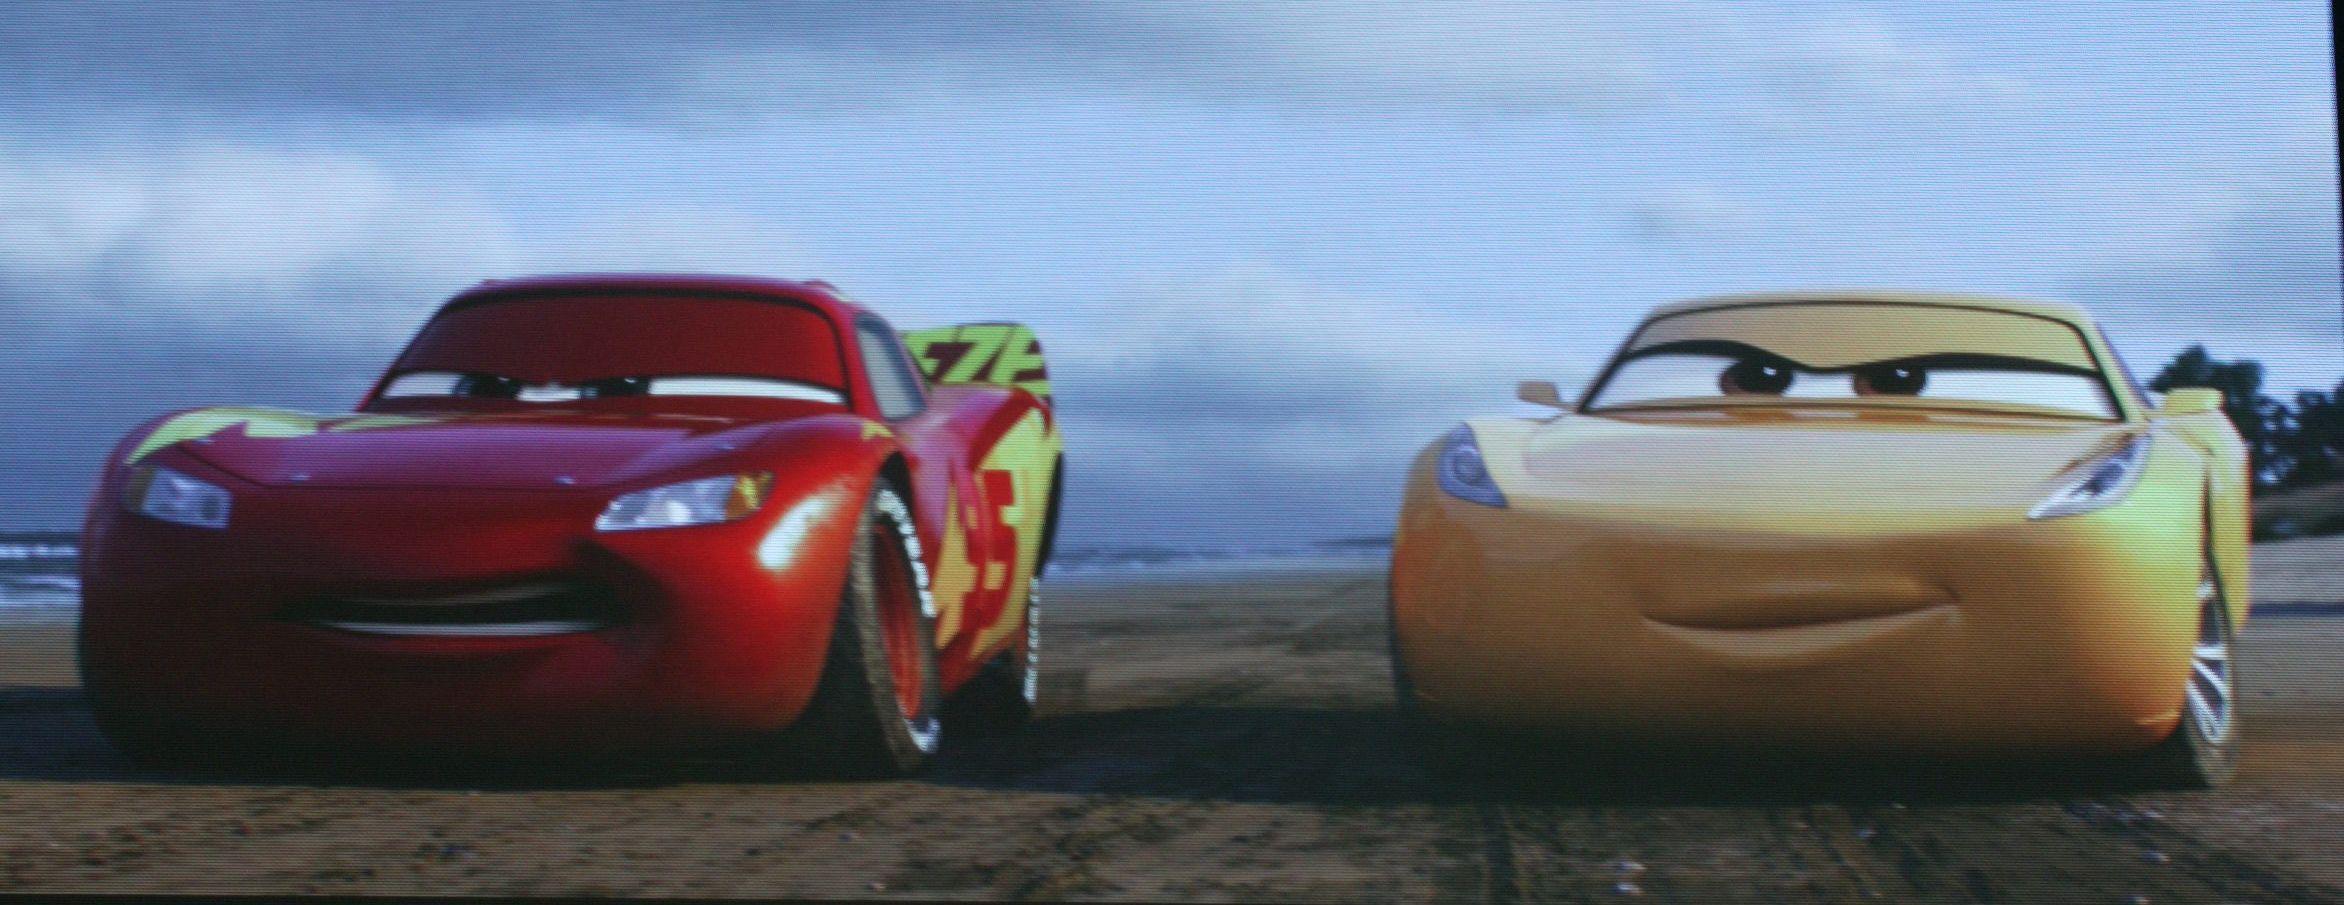 Lightning McQueen and Cruz Ramirez from Cars 3. Pixarized Cars